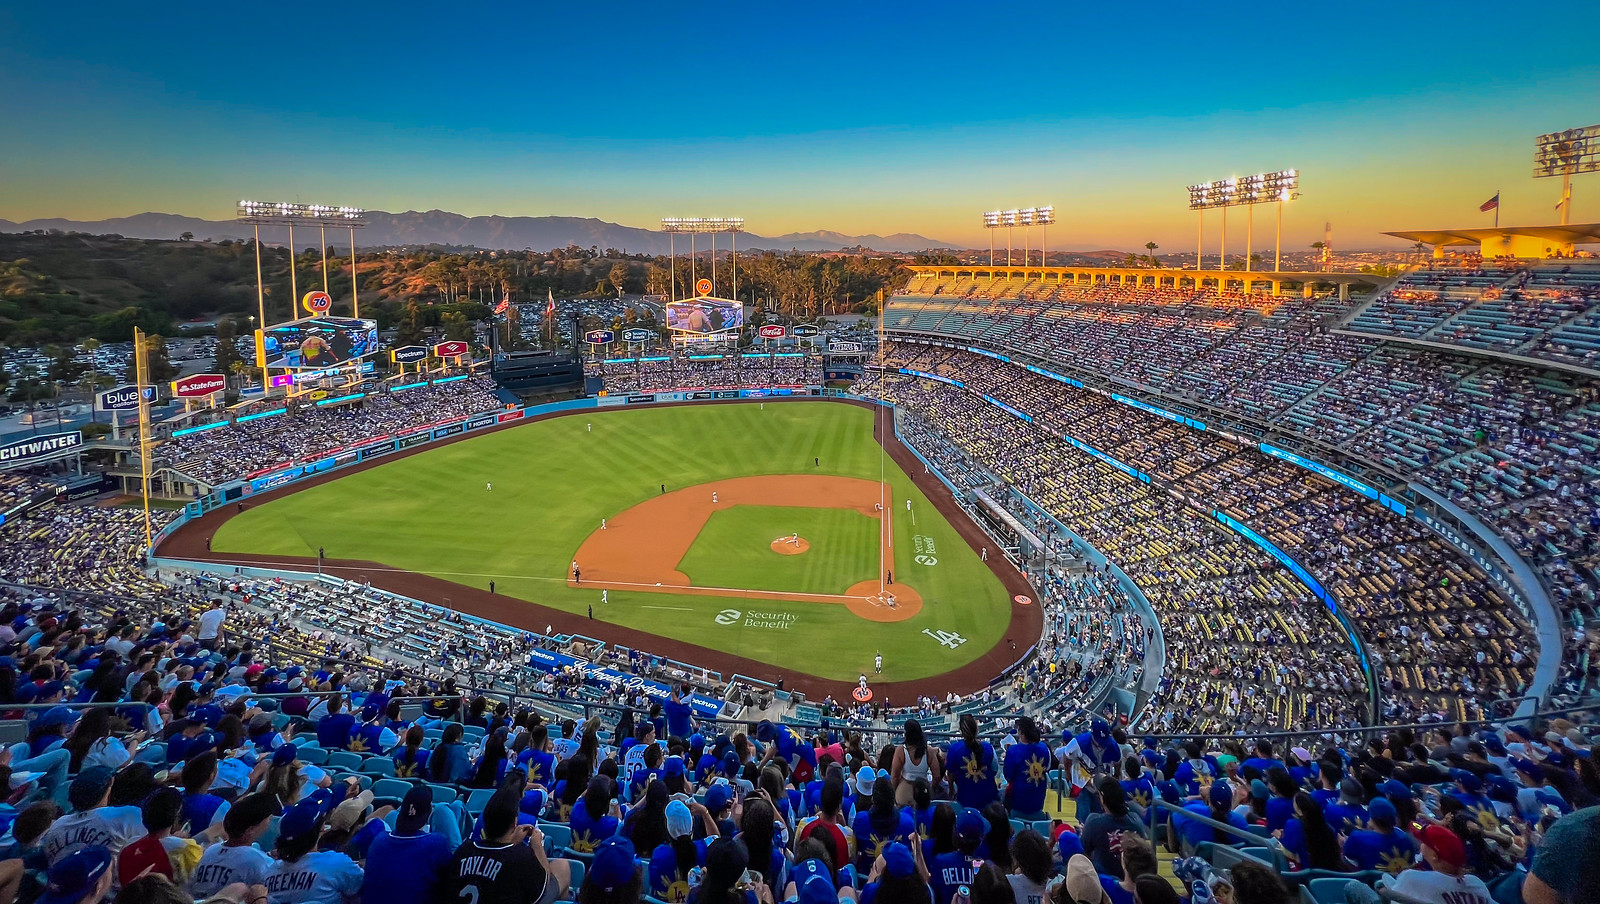 Panorama view of Dodgers Stadium during sunset